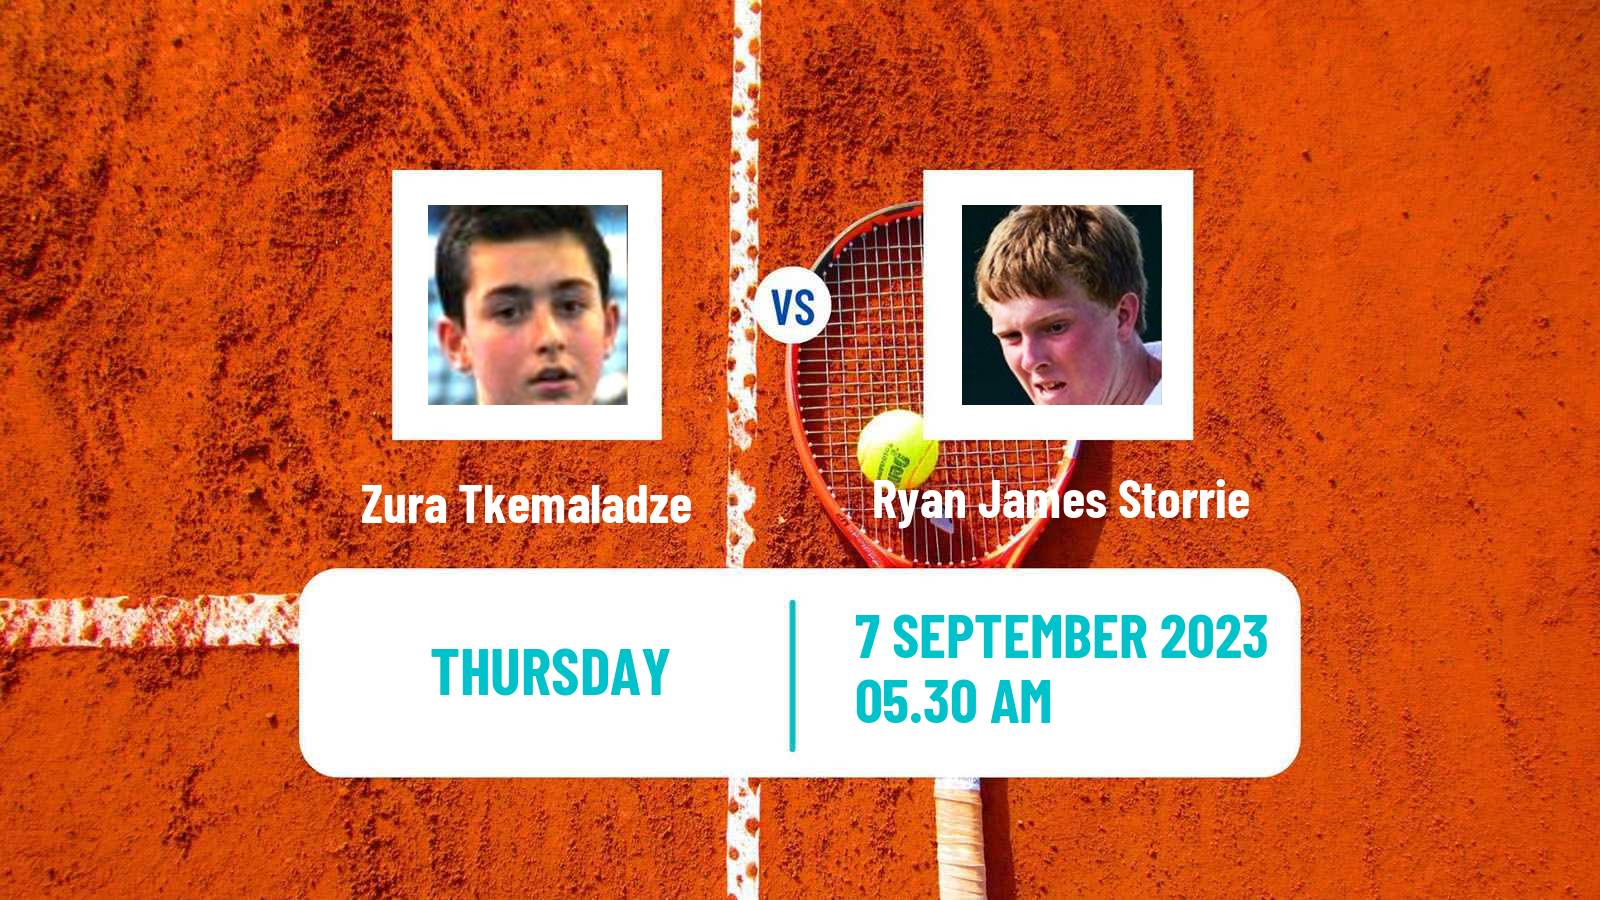 Tennis ITF M15 Budapest 2 Men Zura Tkemaladze - Ryan James Storrie